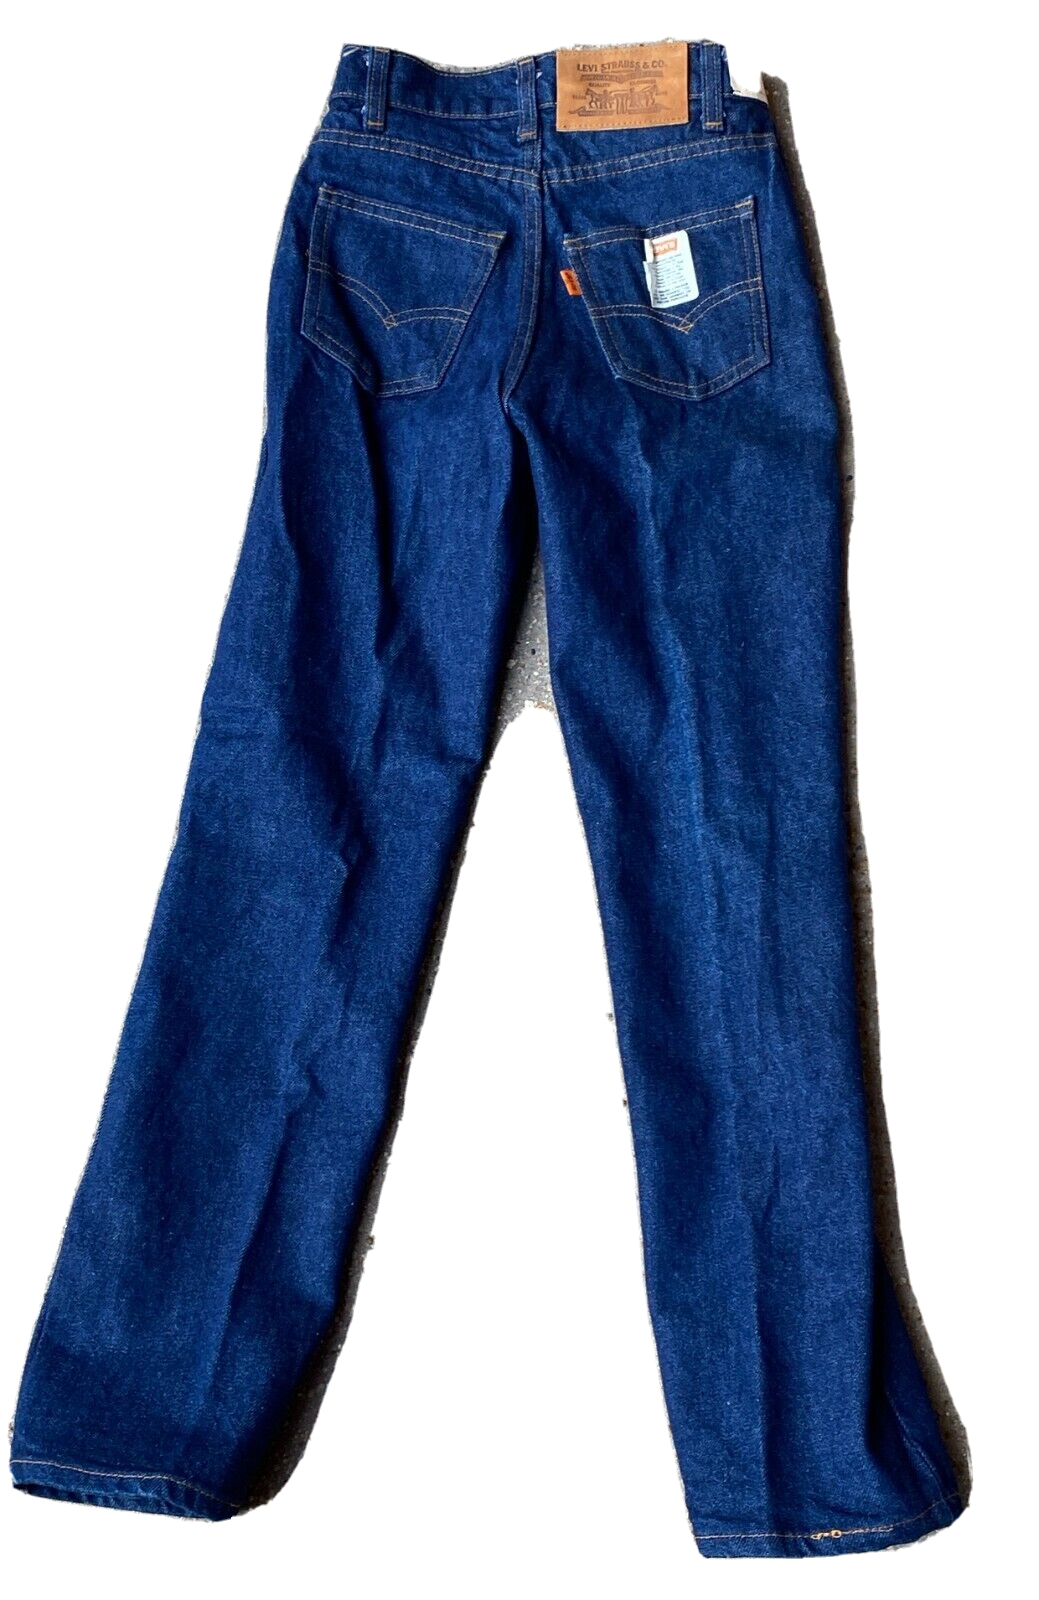 Primary image for Levi's Slim 1982 Student Fit Straight Leg Jeans 24w X 26L TALON New 405-0216